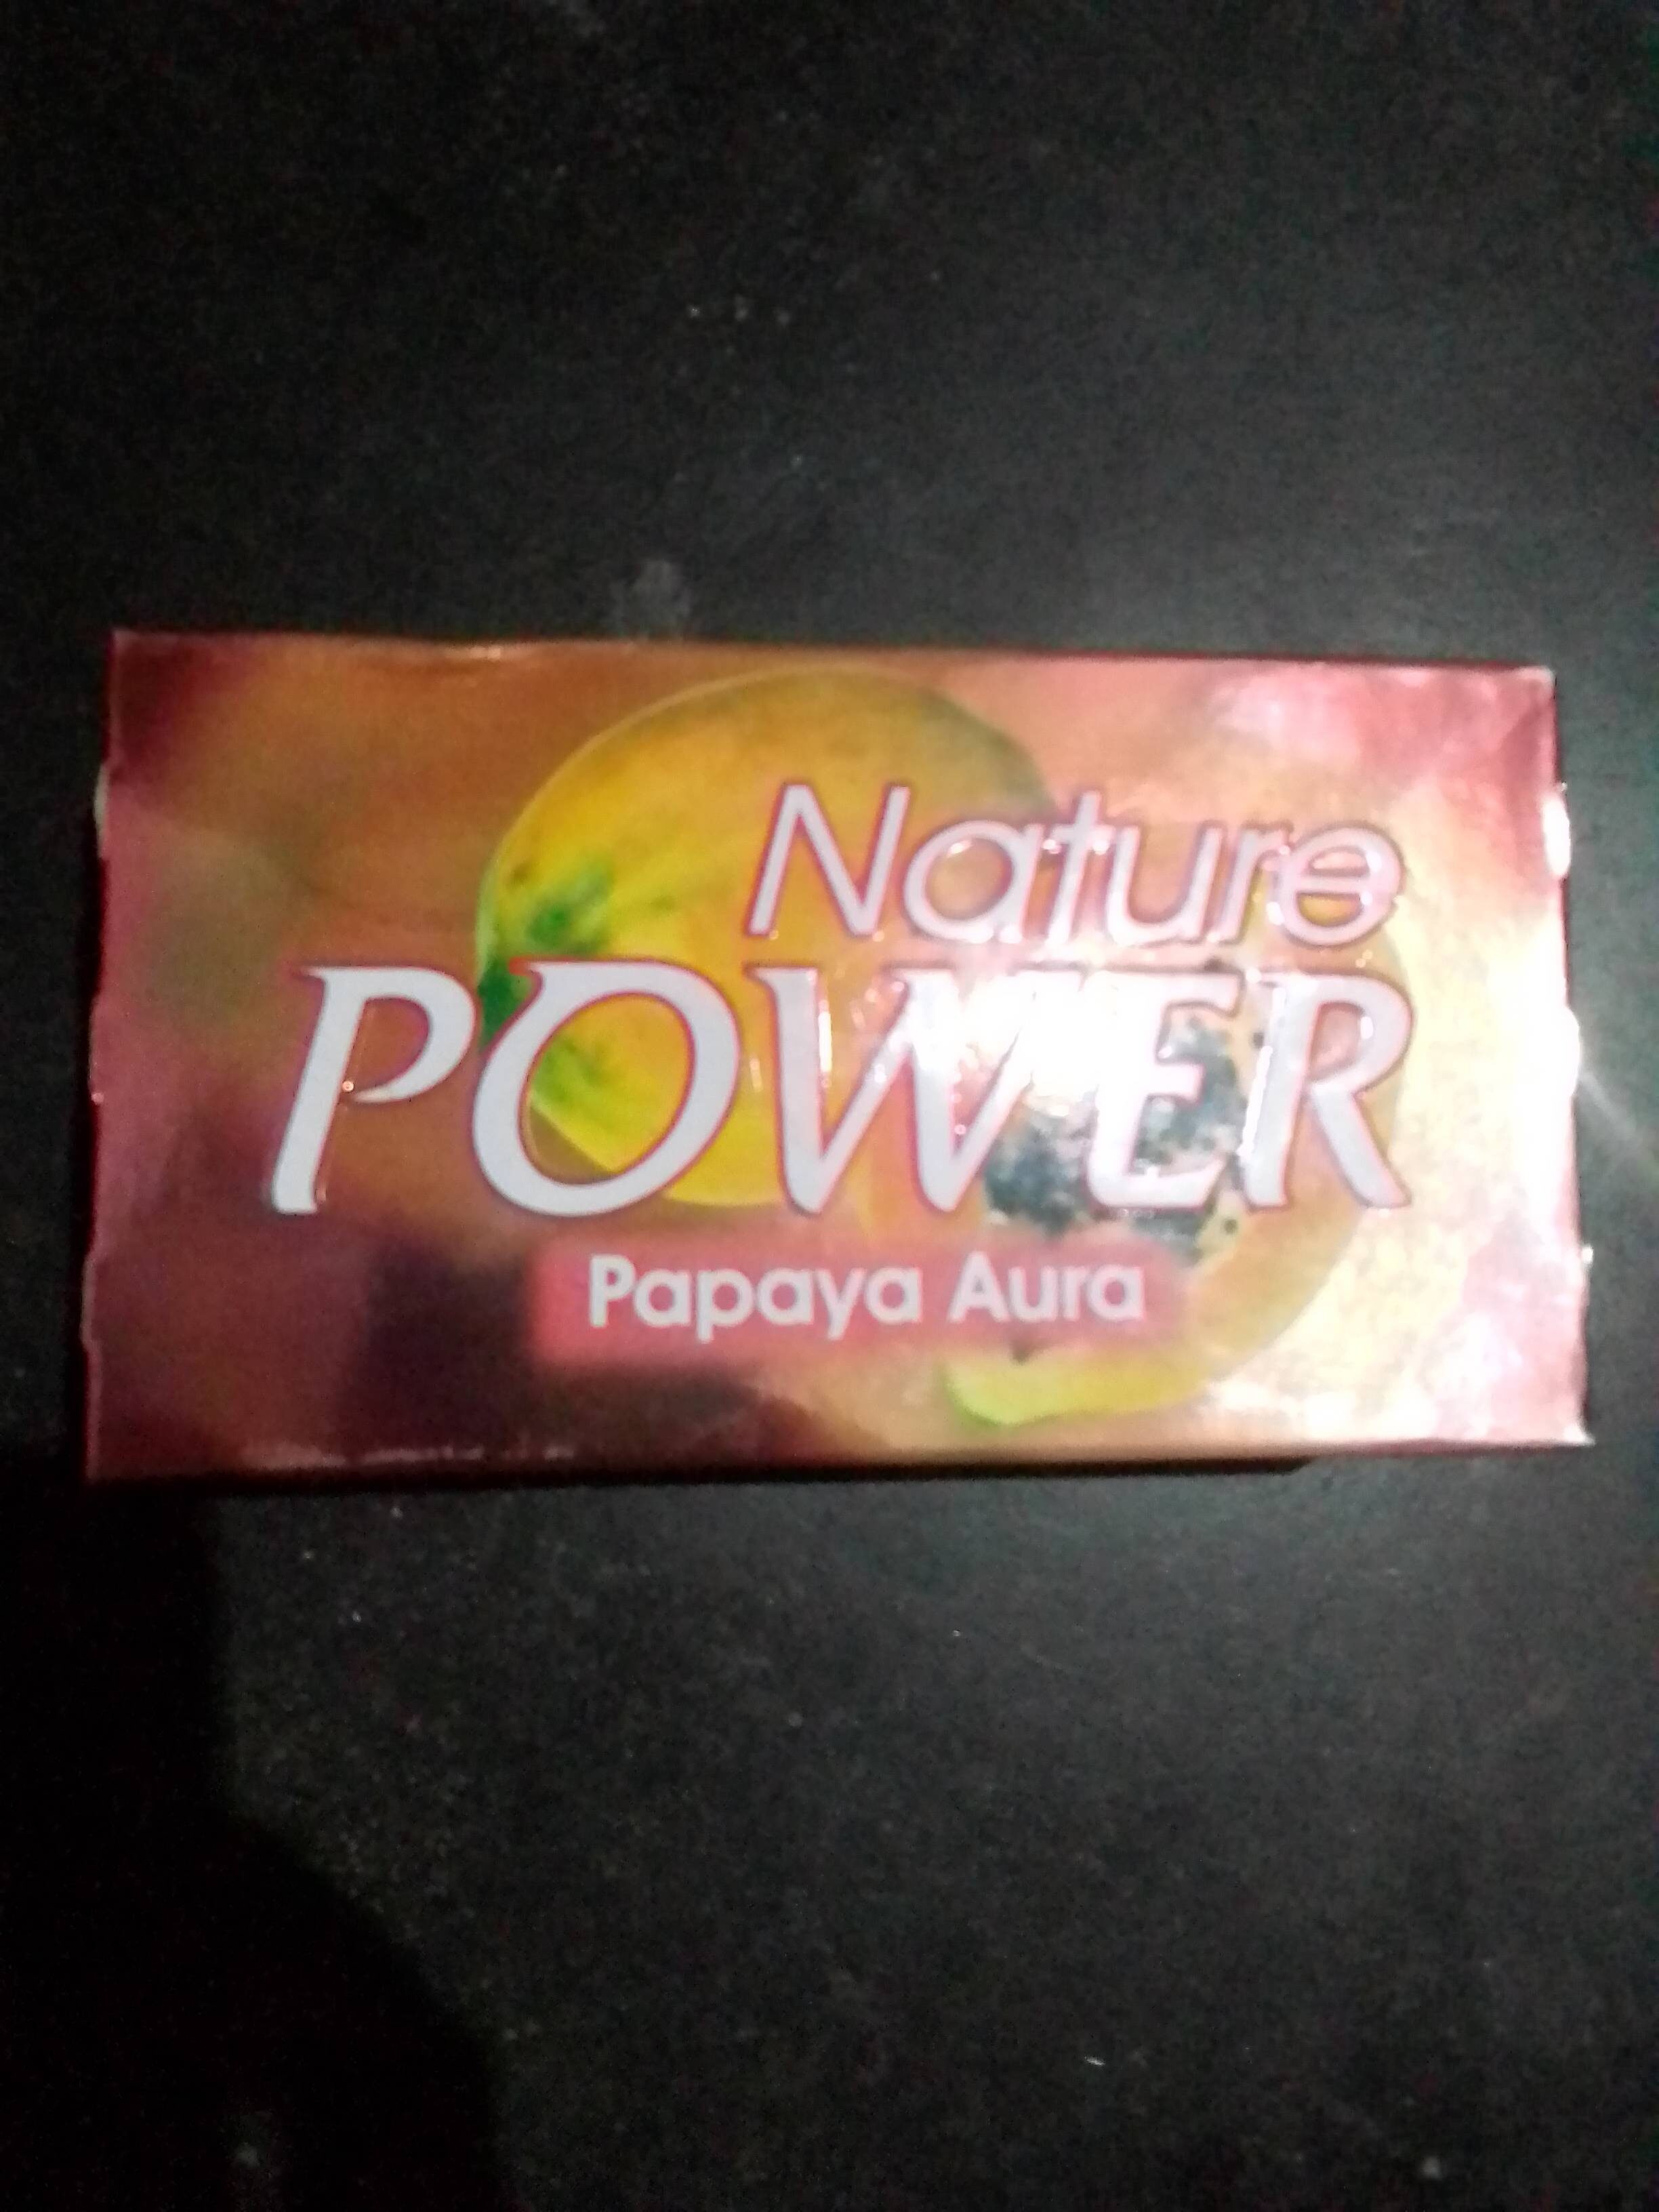 Nature power papaya soap - Produkt - en